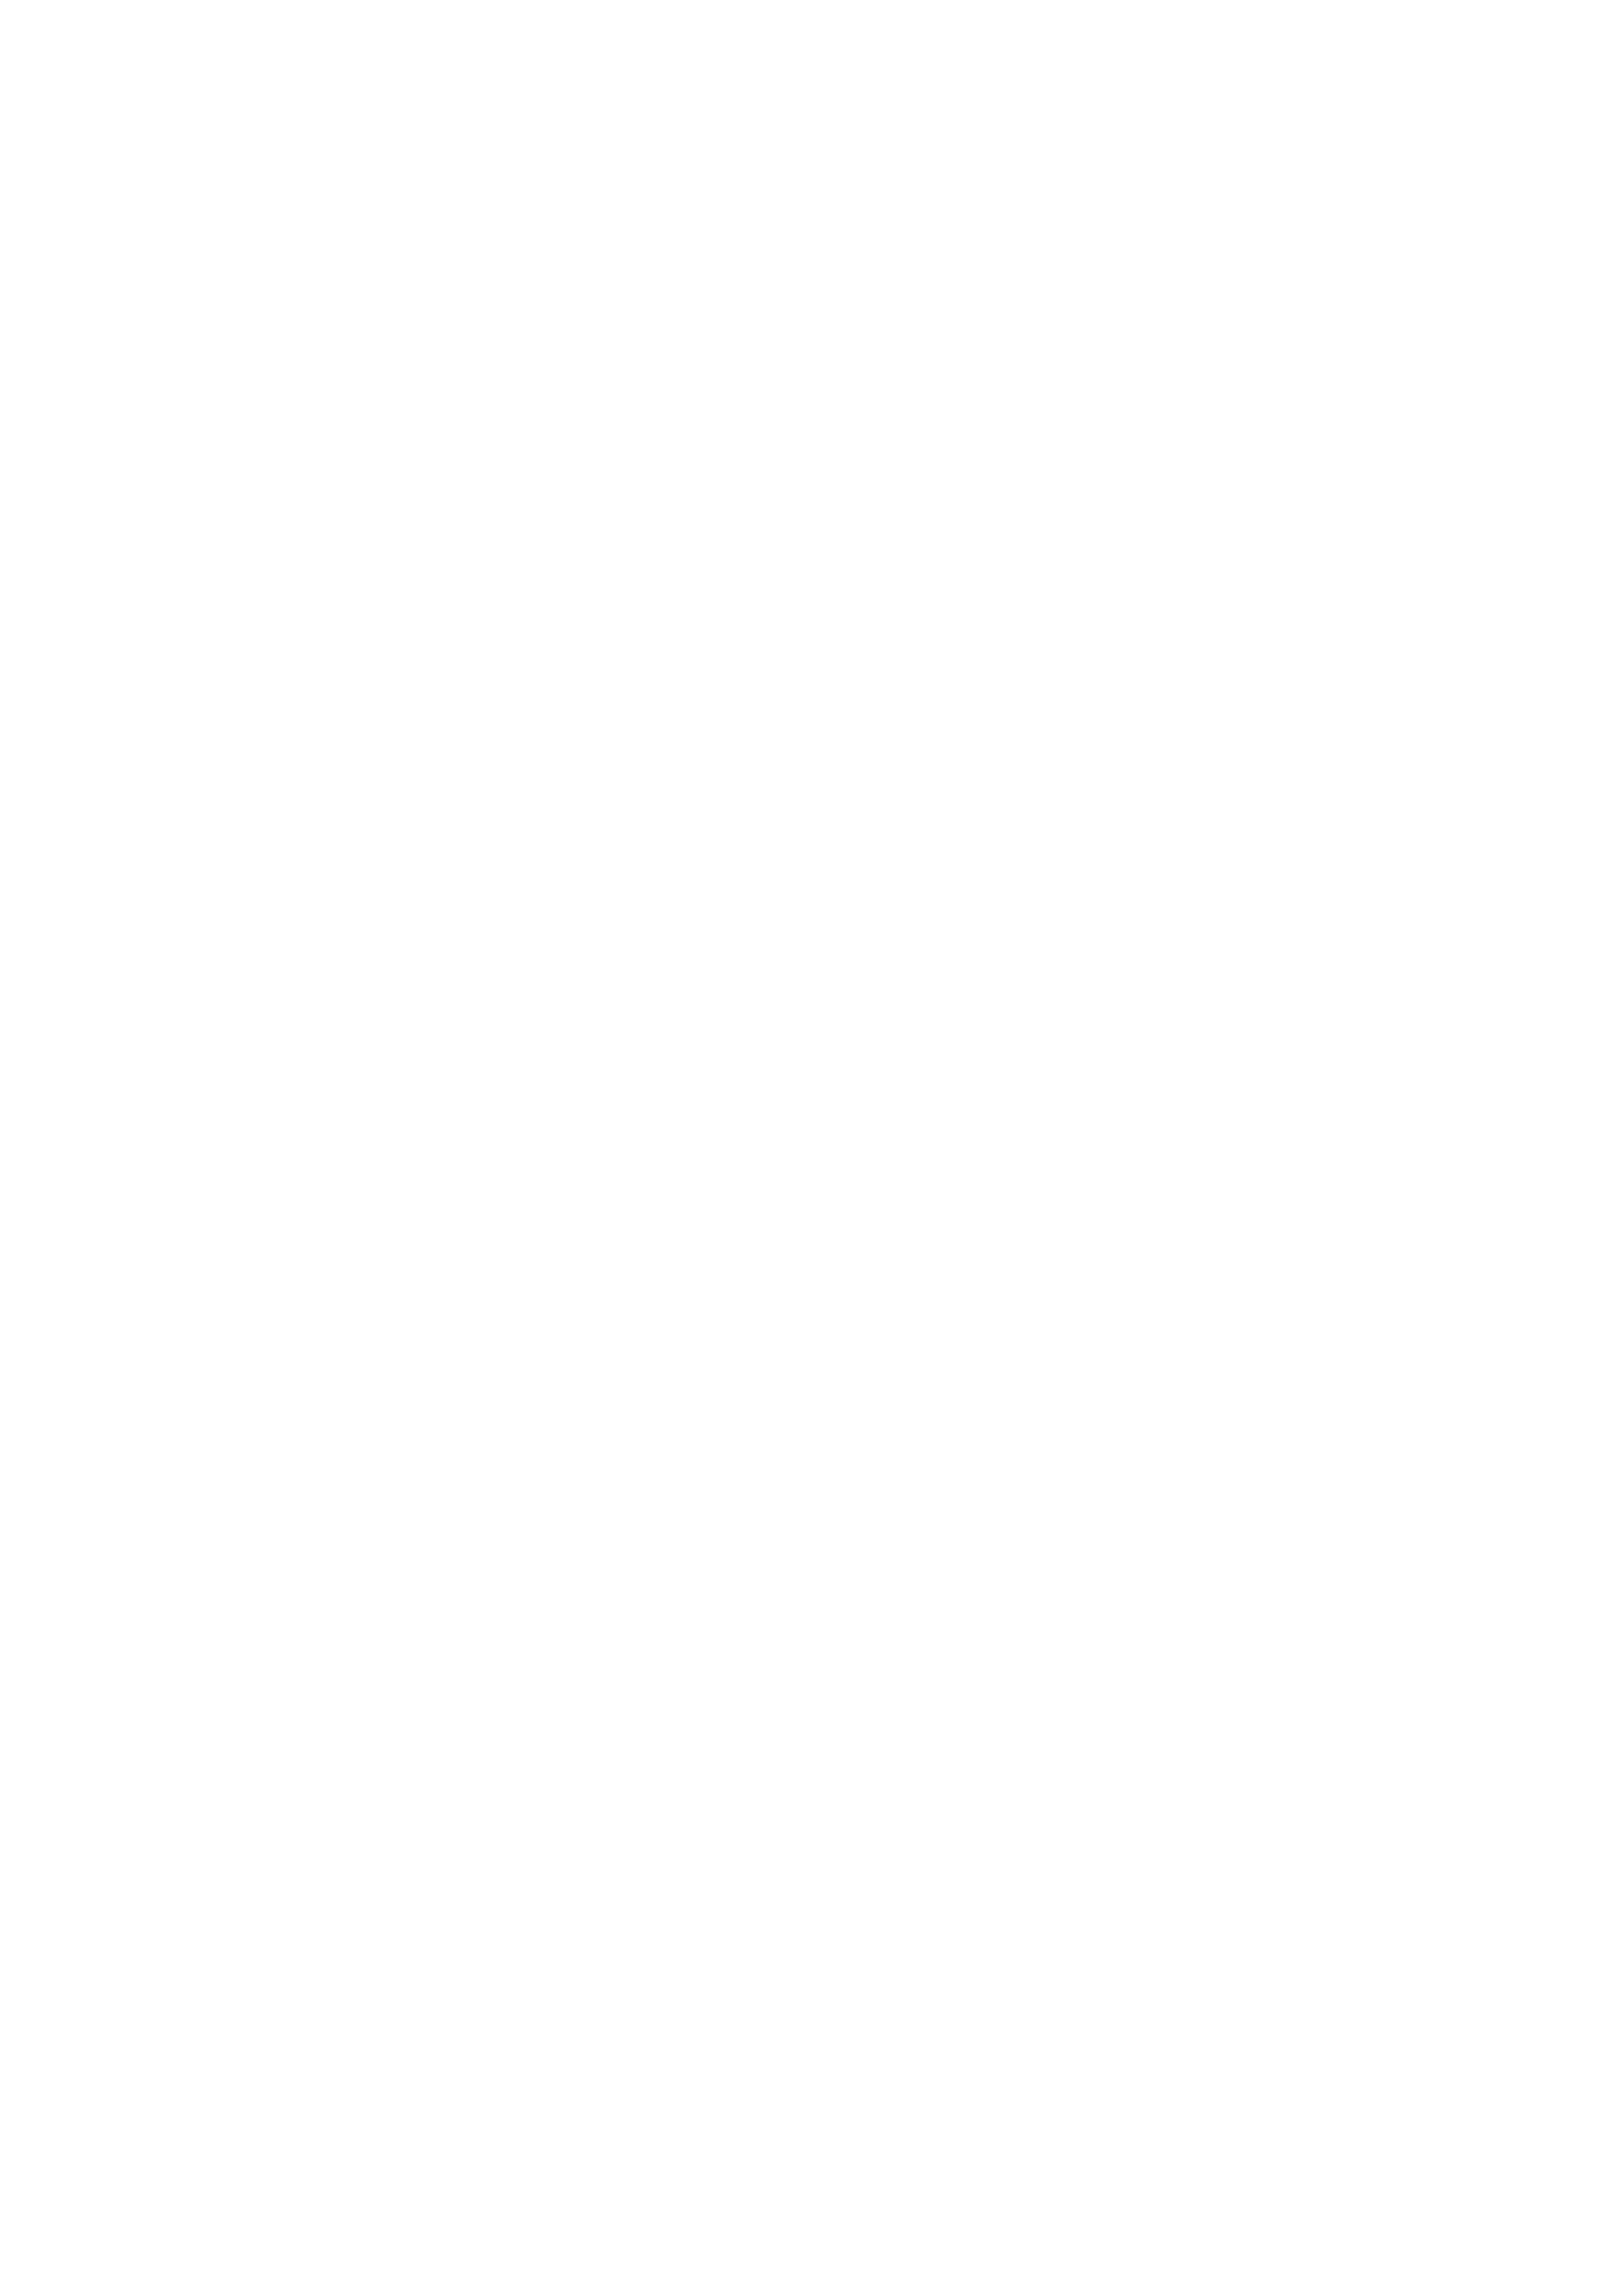 IAmber_logo_vertical_white_A3